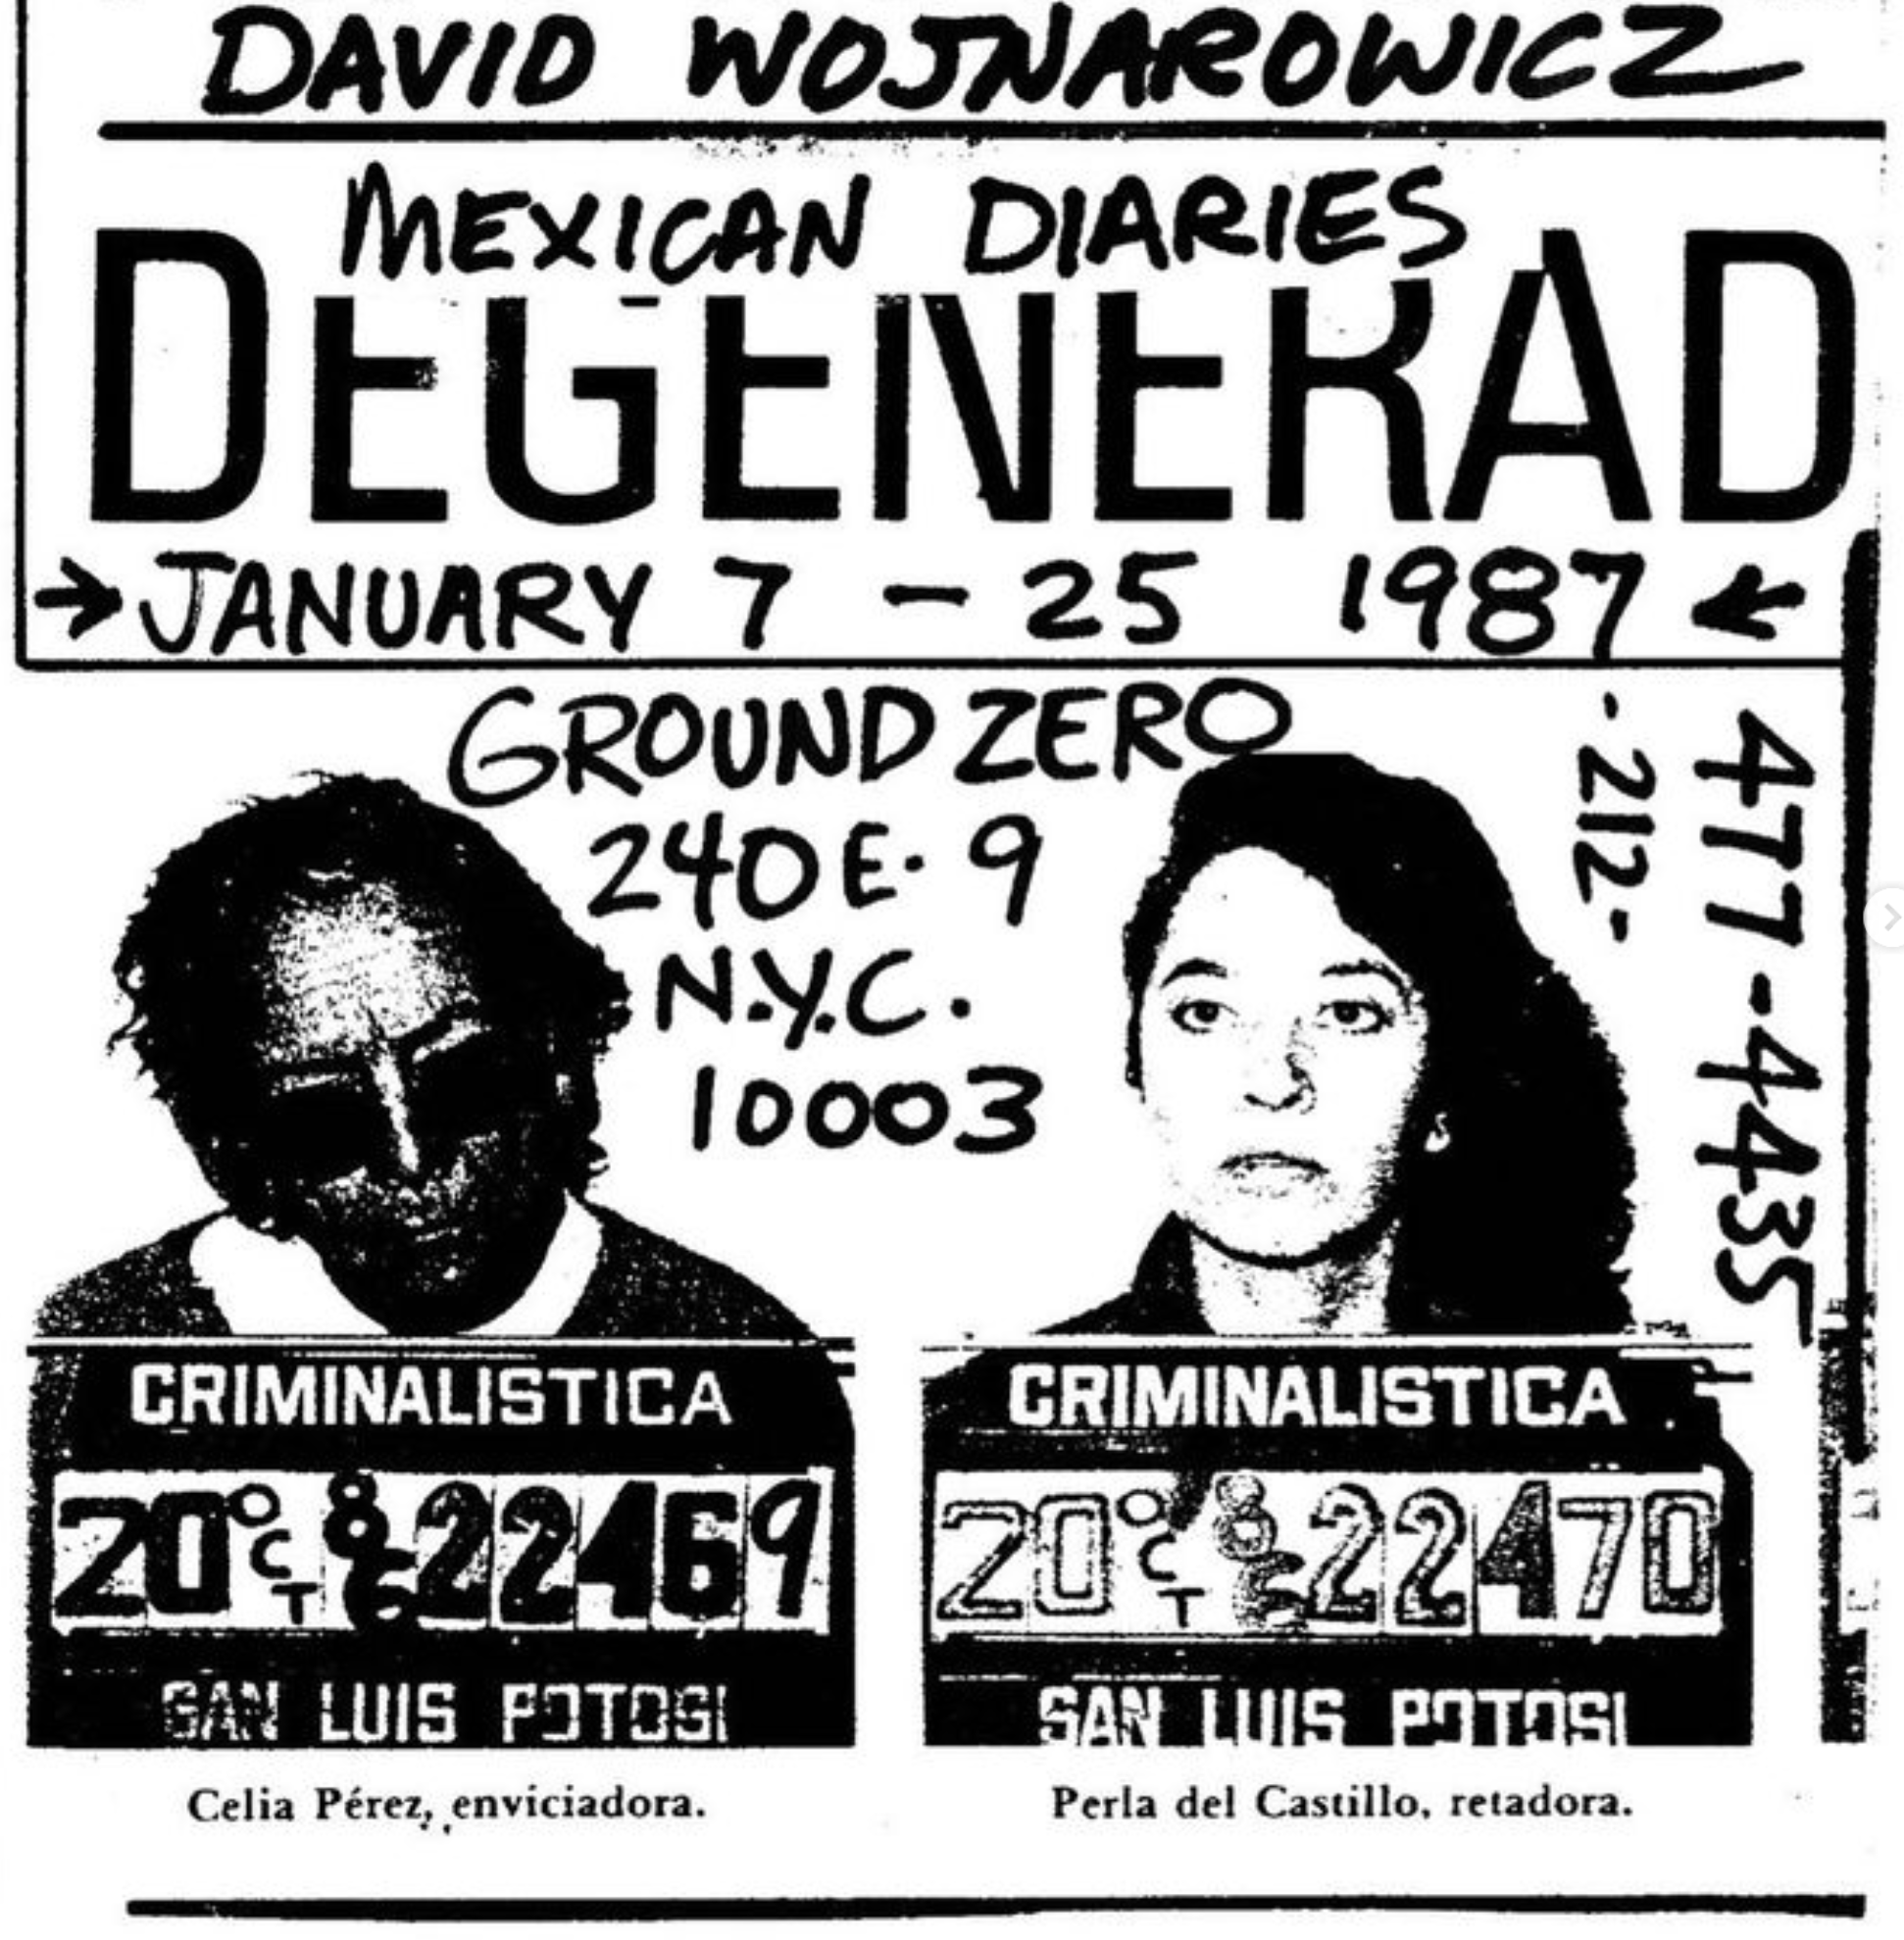 Invitation to David Wojnarowicz, Mexican Diaries exhibit, Ground Zero, January 1987